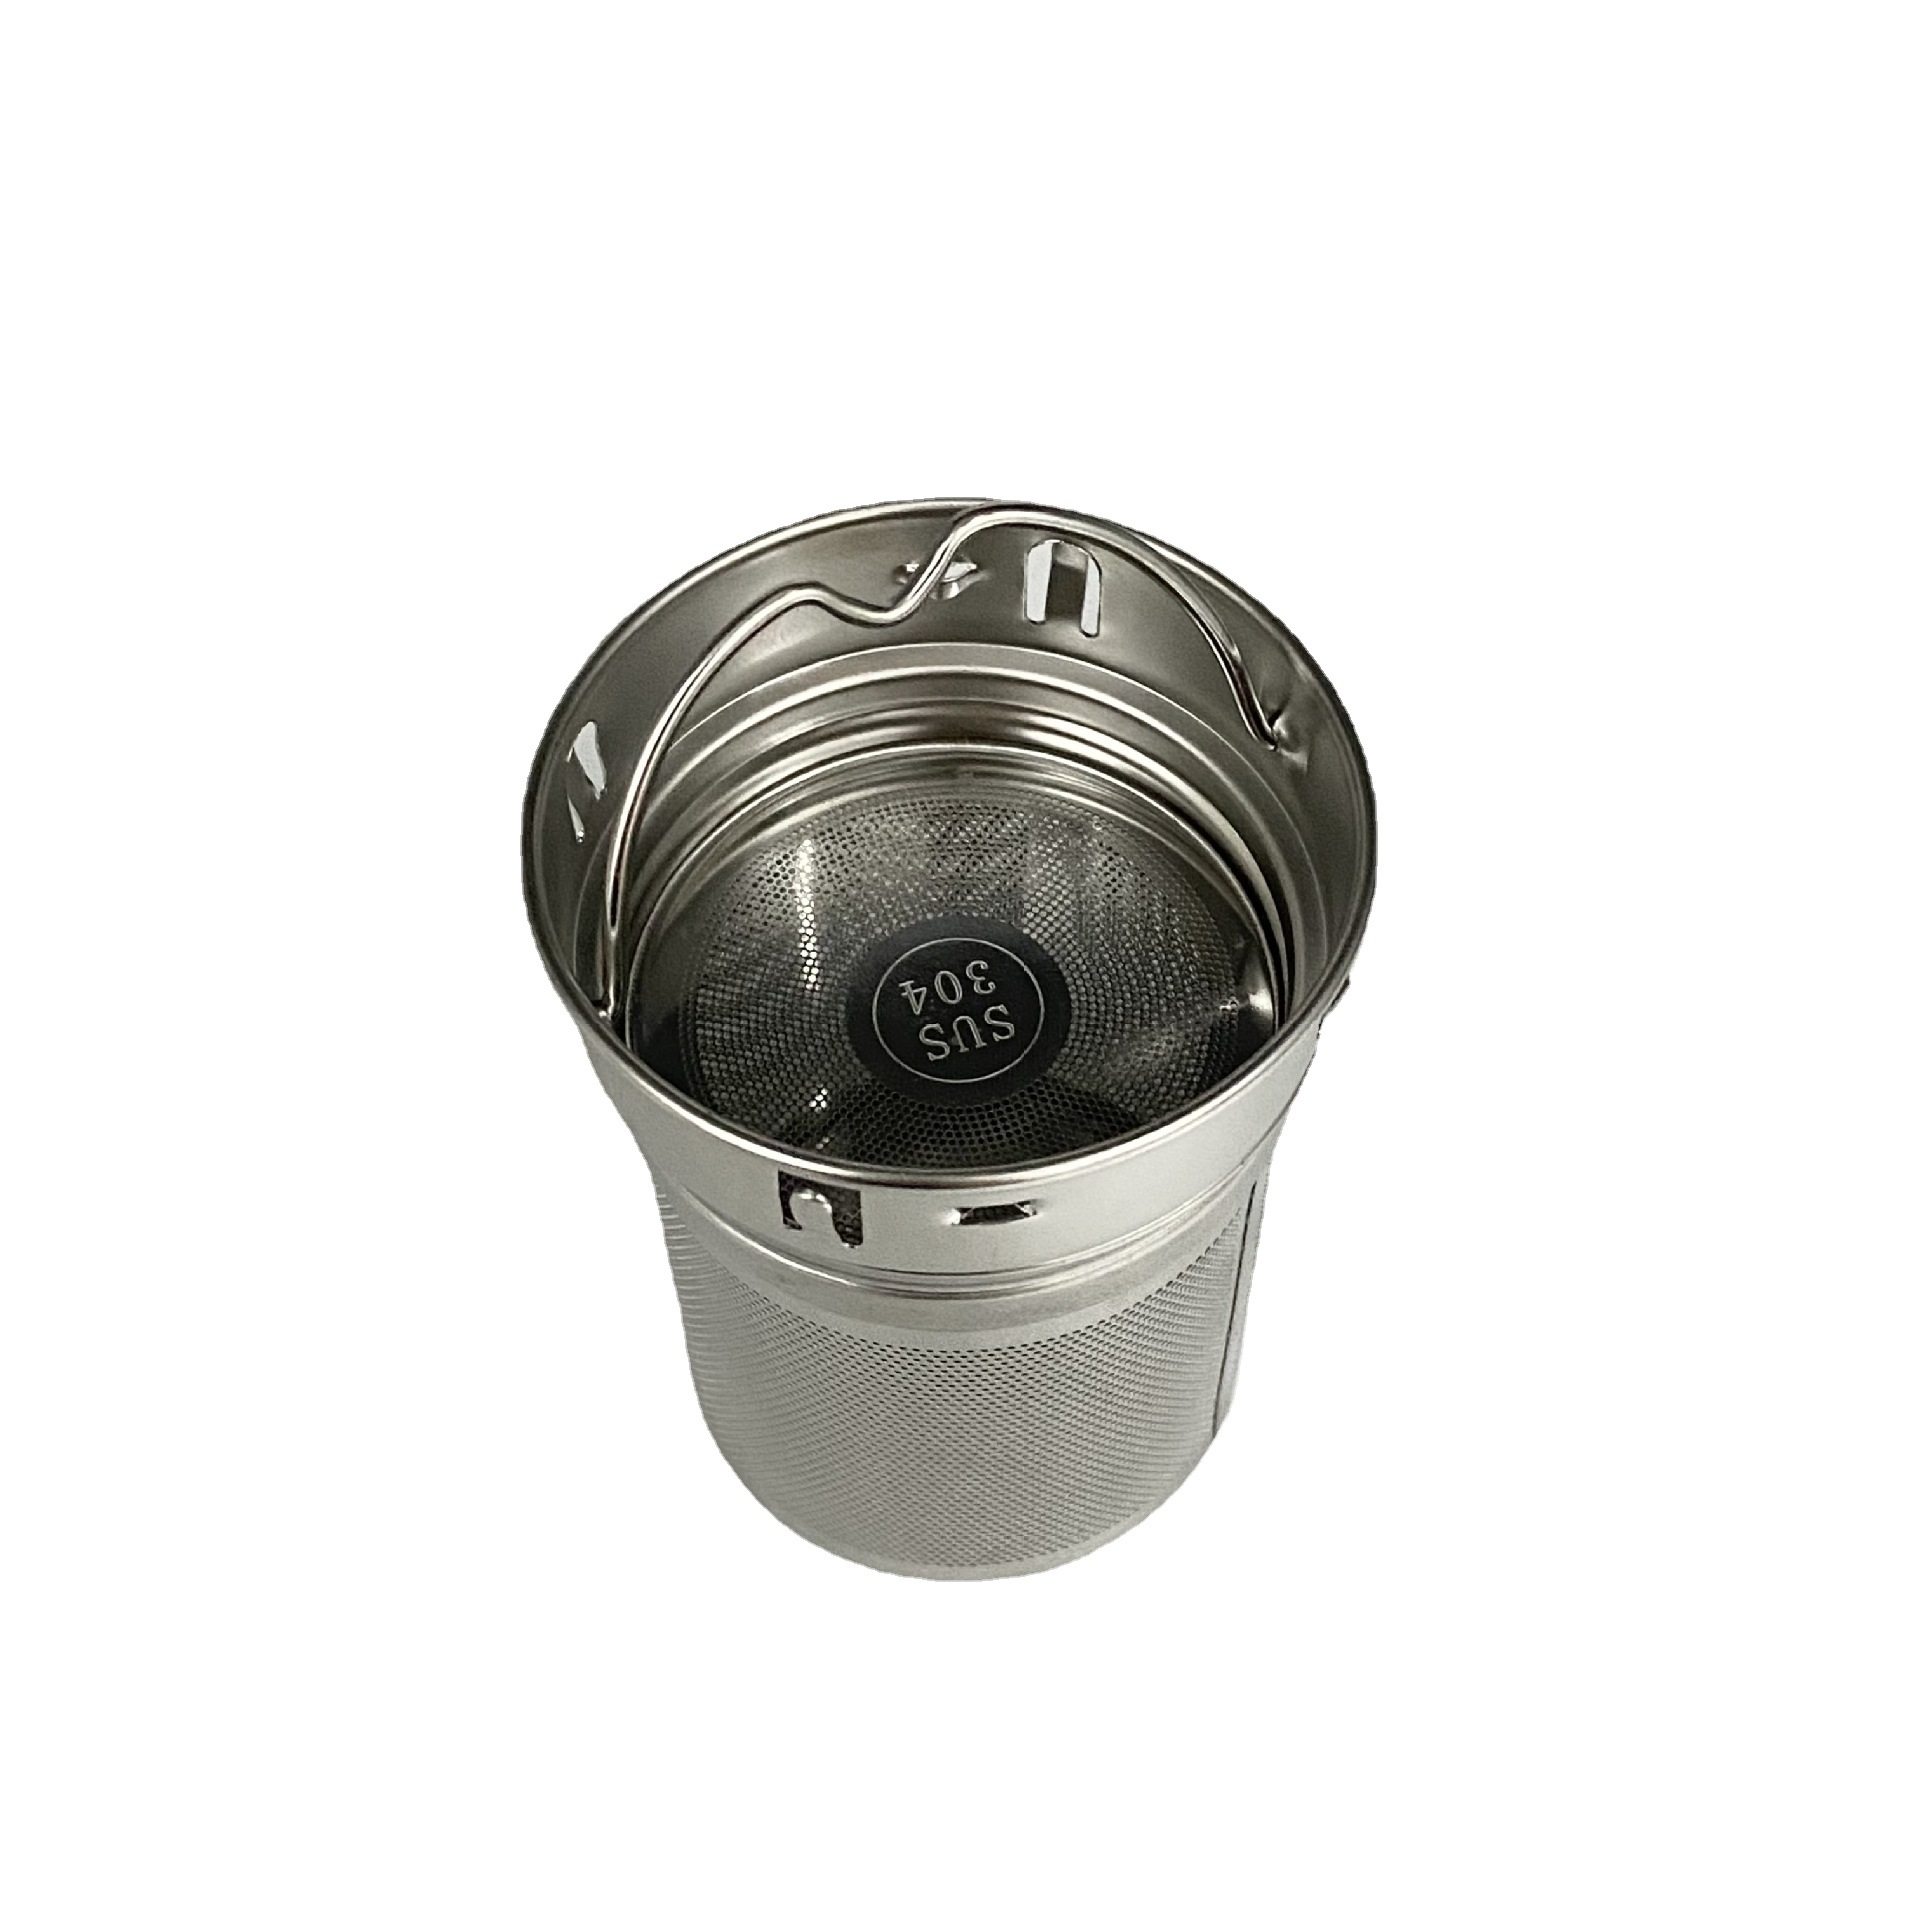 Vacuum stainless steel sports kettle|22oz